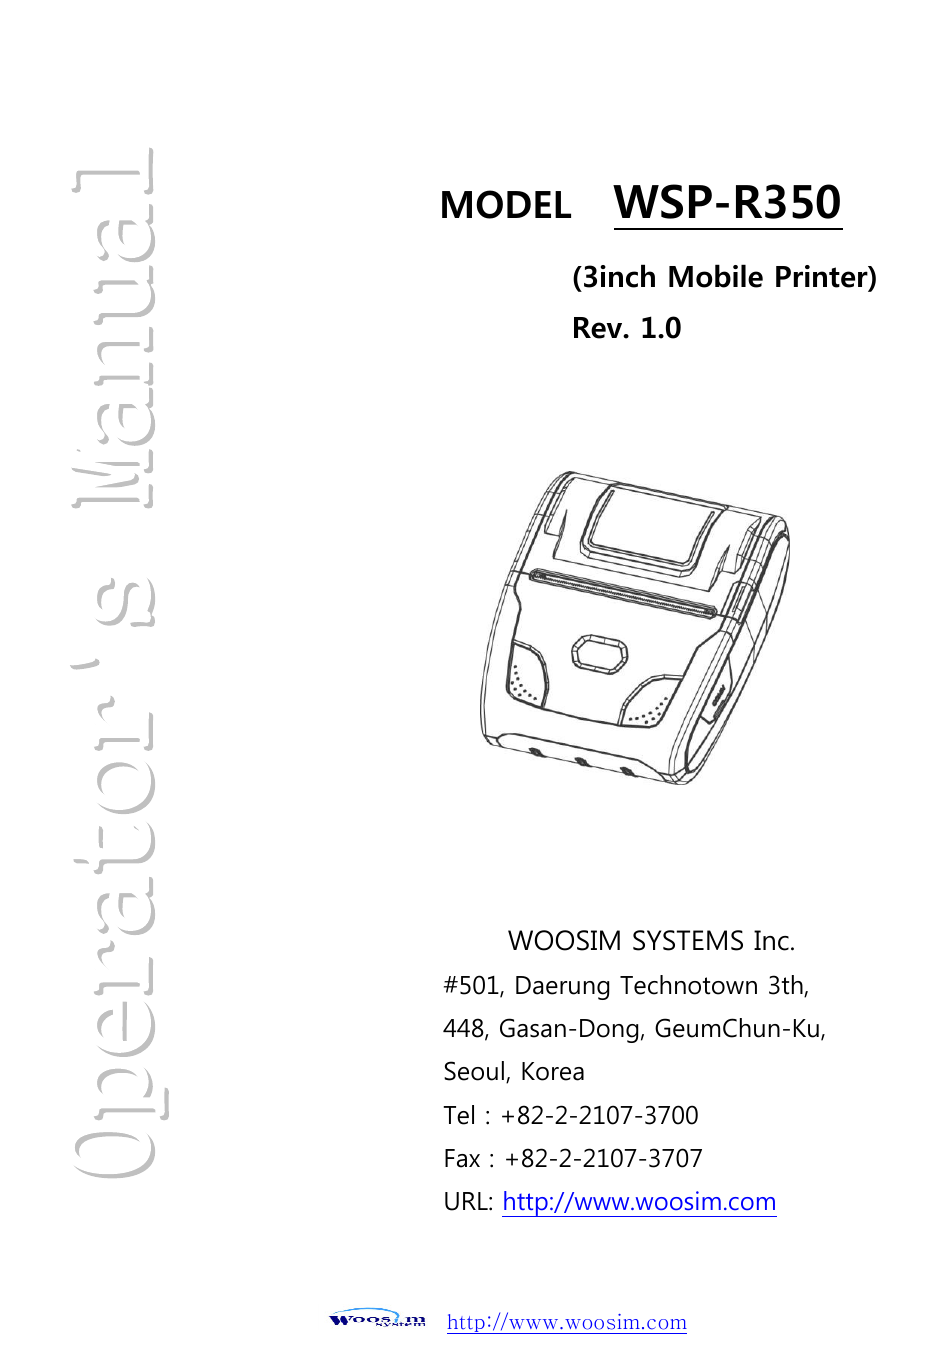          http://www.woosim.com                                                               MODEL  WSP-R350    WOOSIM SYSTEMS Inc. #501, Daerung Technotown 3th, 448, Gasan-Dong, GeumChun-Ku,   Seoul, Korea Tel : +82-2-2107-3700 Fax : +82-2-2107-3707 URL: http://www.woosim.com  (3inch Mobile Printer) Rev. 1.0  